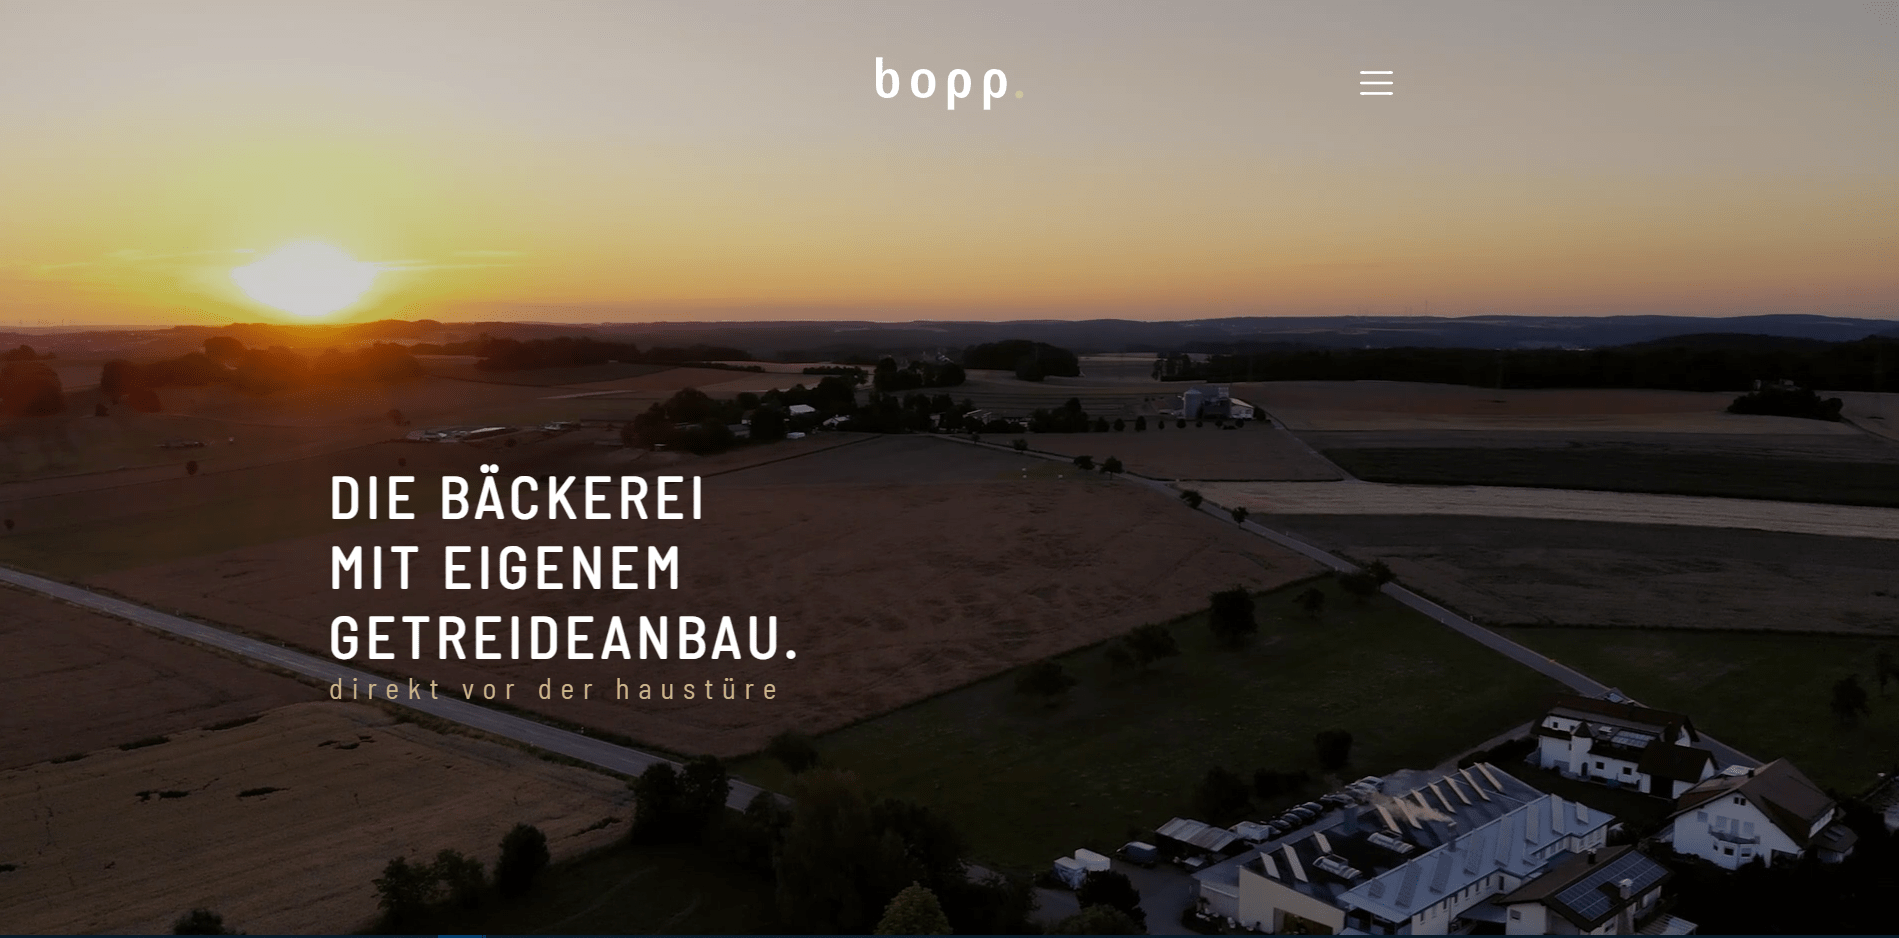 Baeckerei Bopp - Wordpress Webdesign Hamburg - AOS